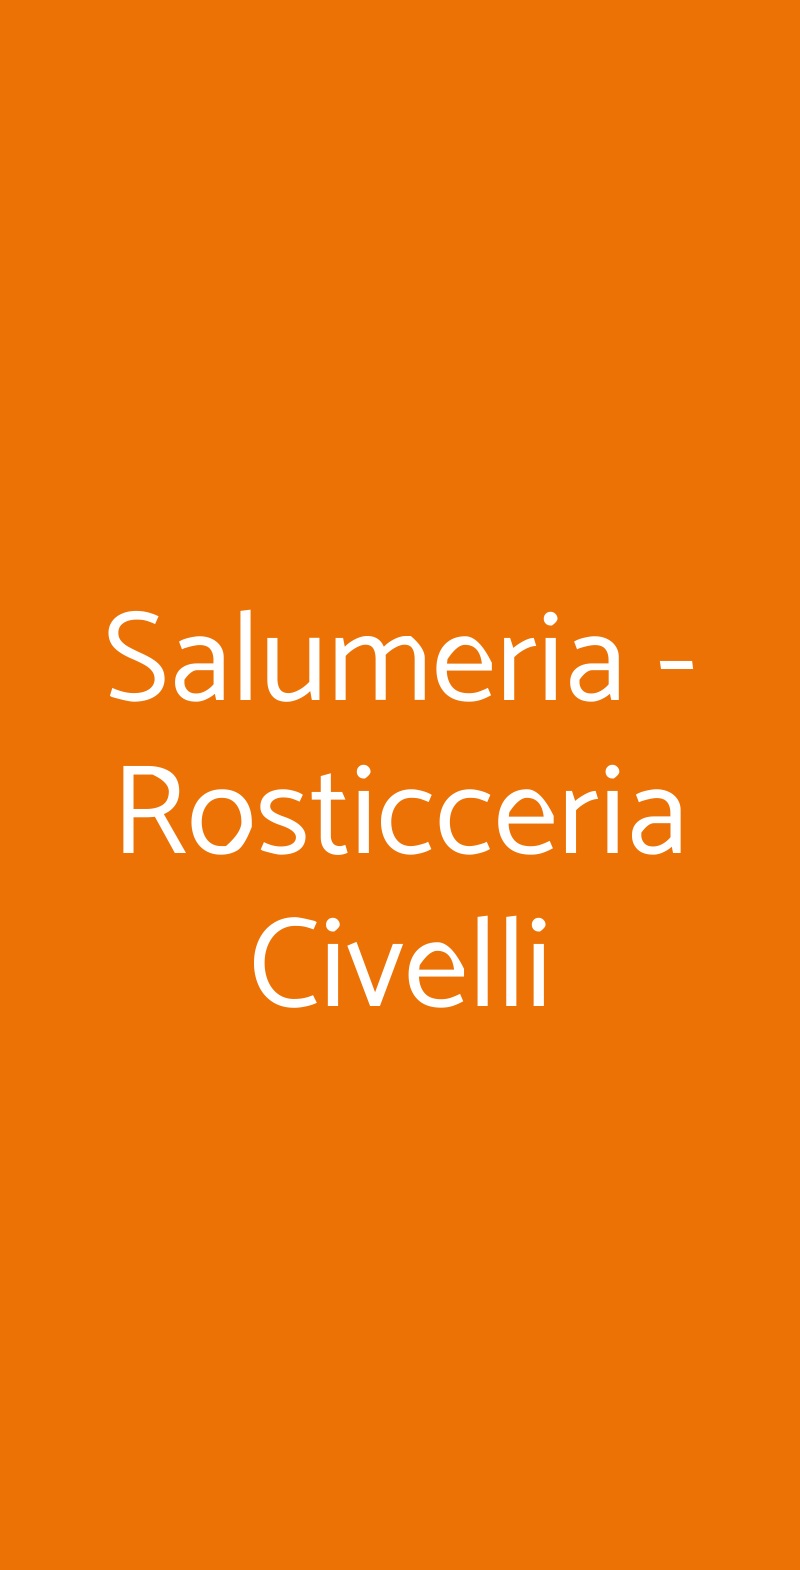 Salumeria - Rosticceria Civelli Milano menù 1 pagina